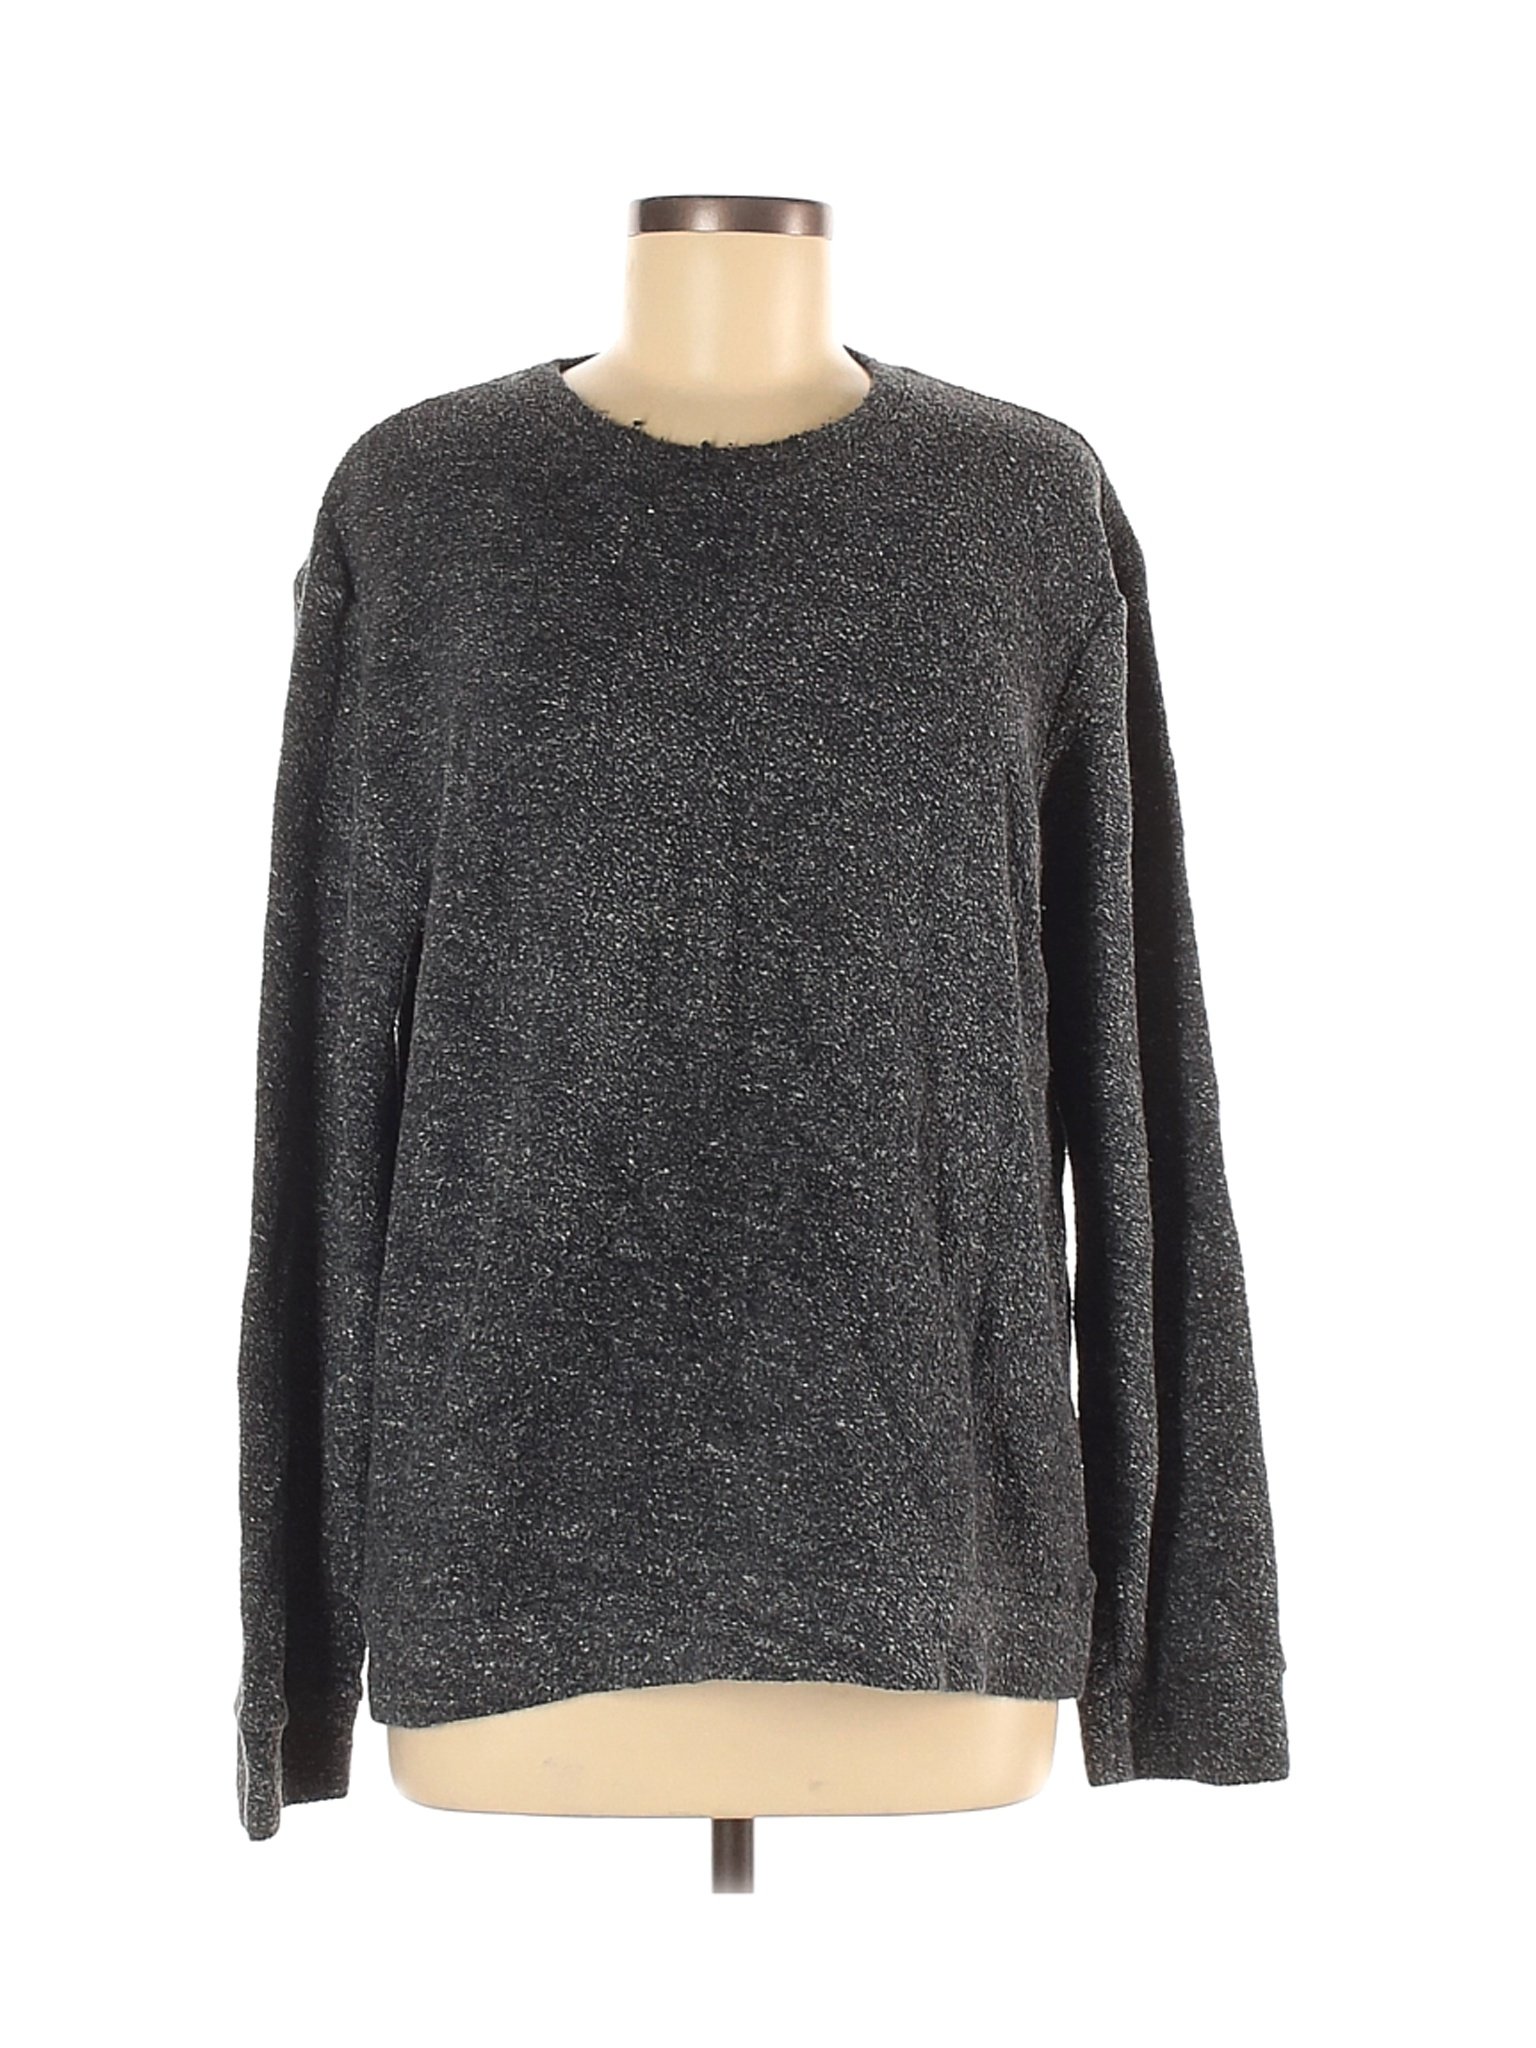 H&M L.O.G.G. Women Gray Pullover Sweater M | eBay